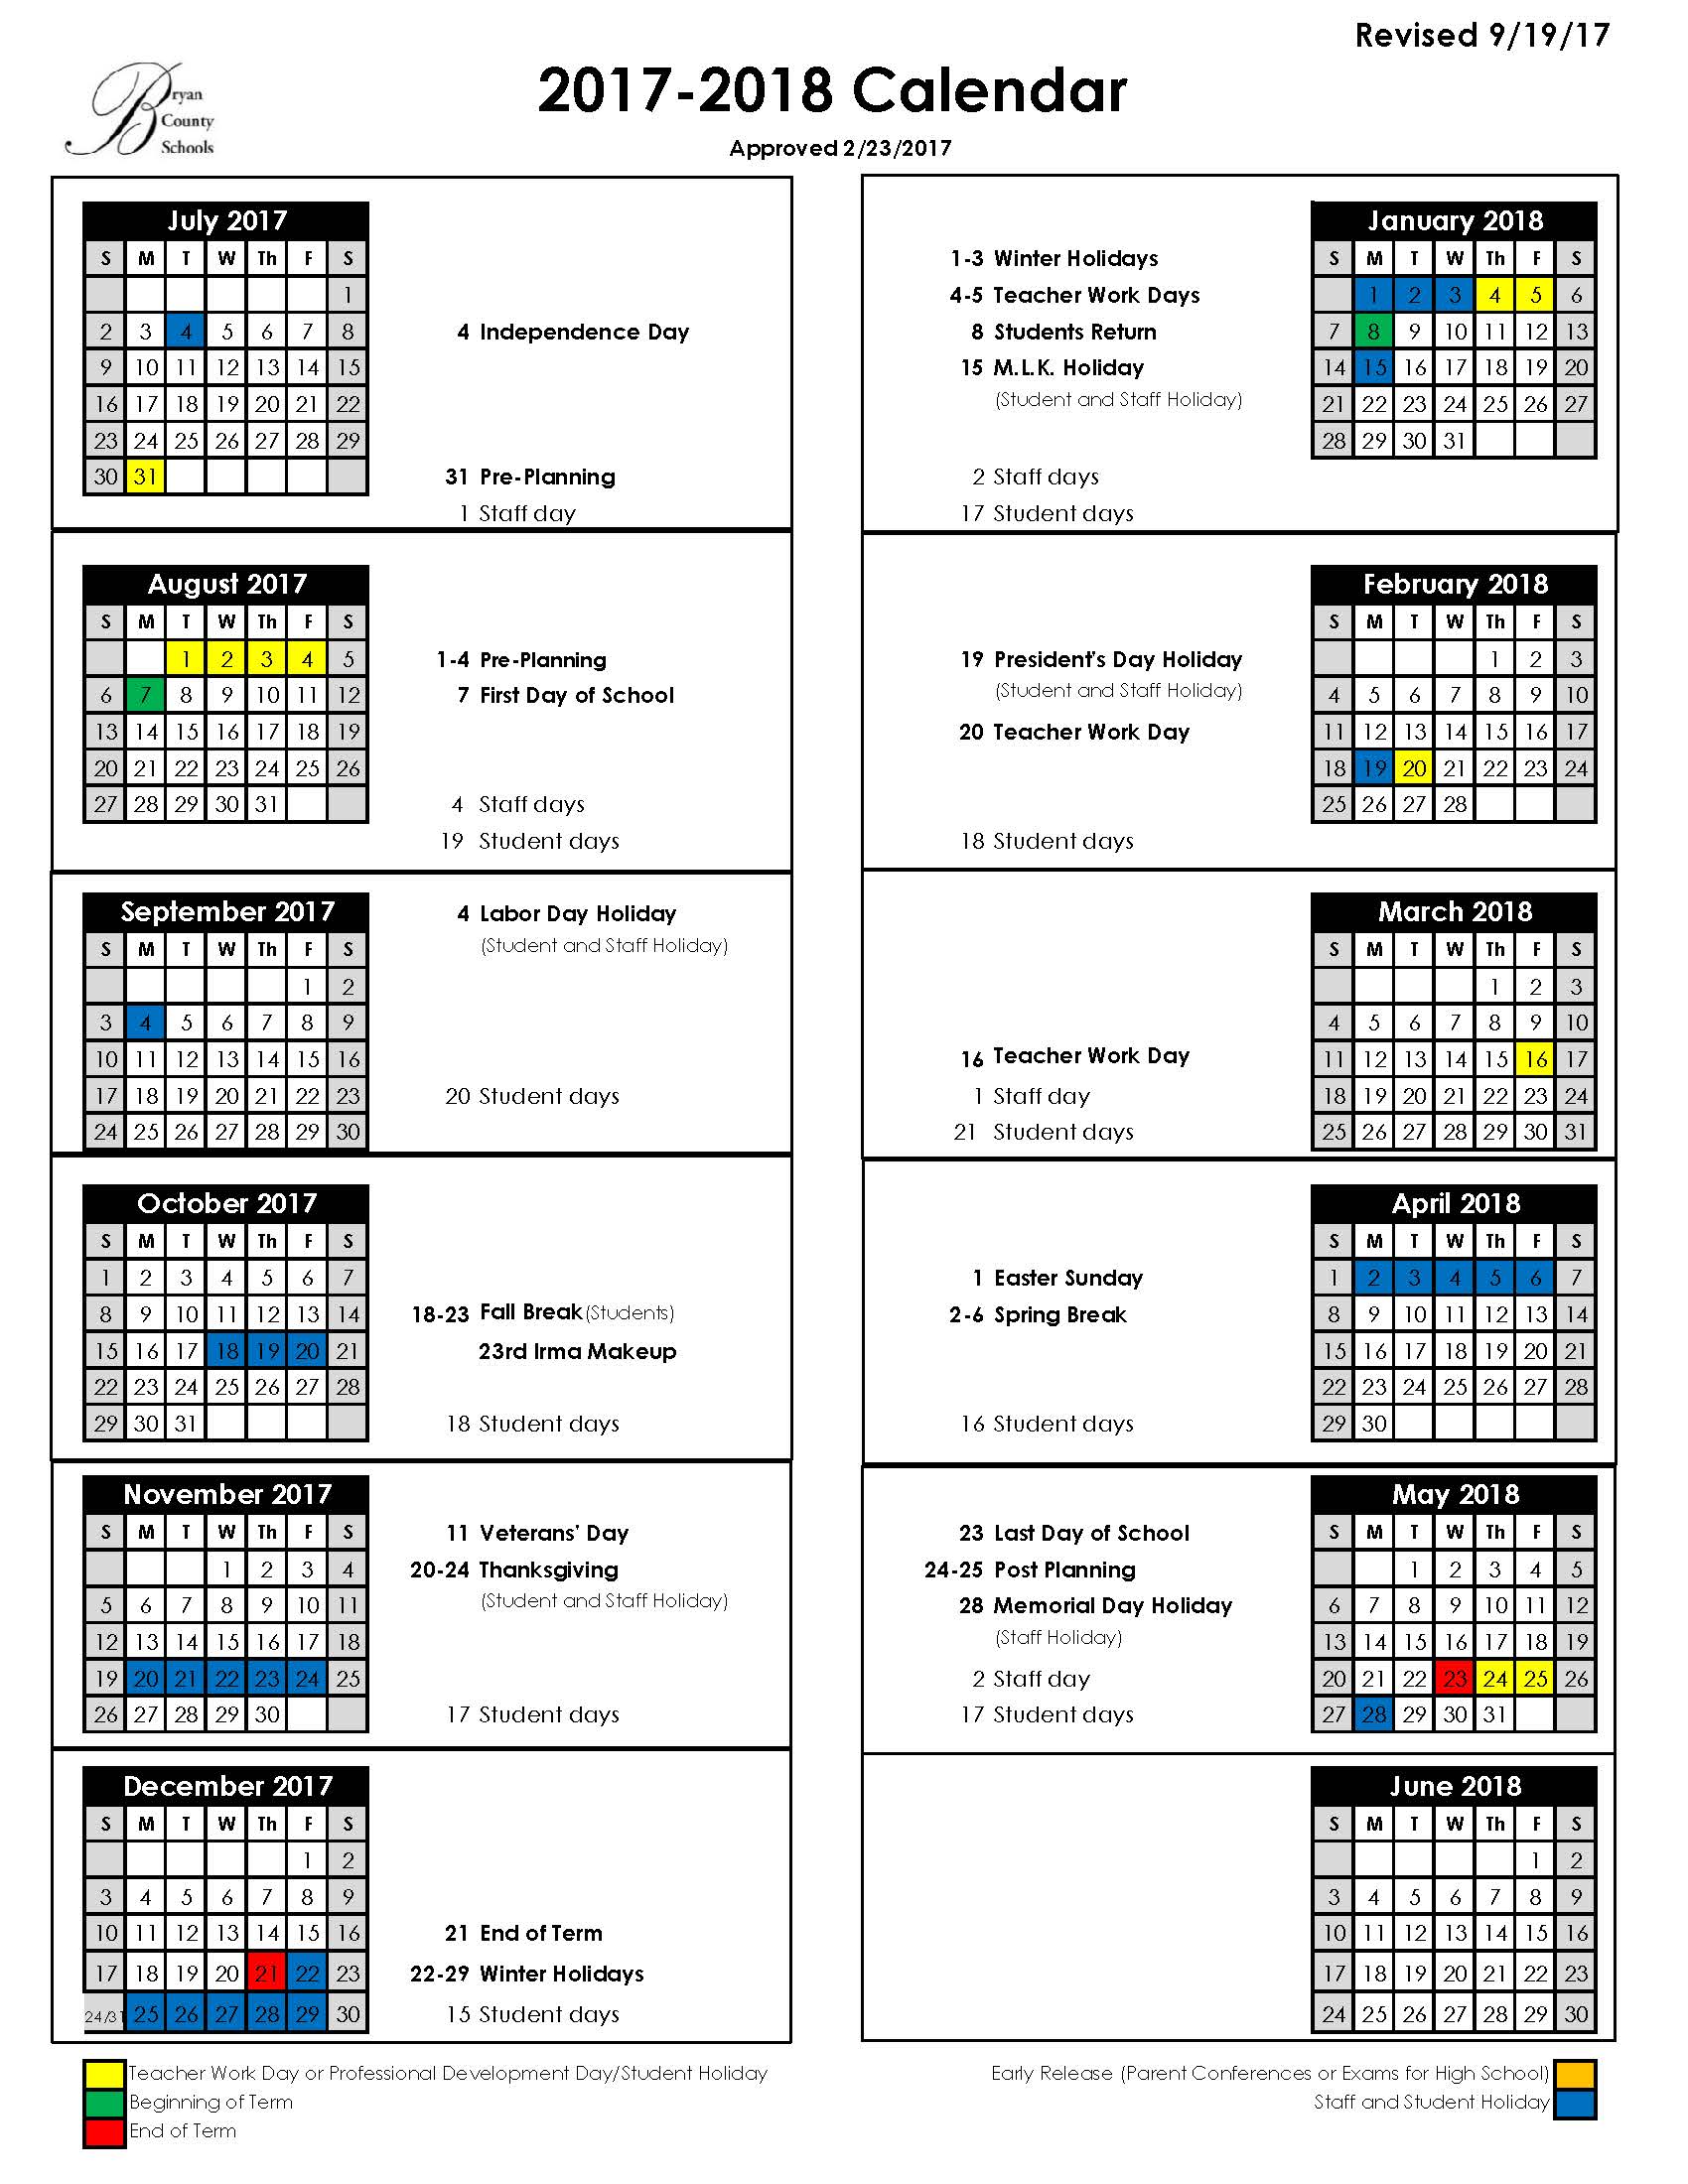 university-of-iowa-academic-calendar-time-table